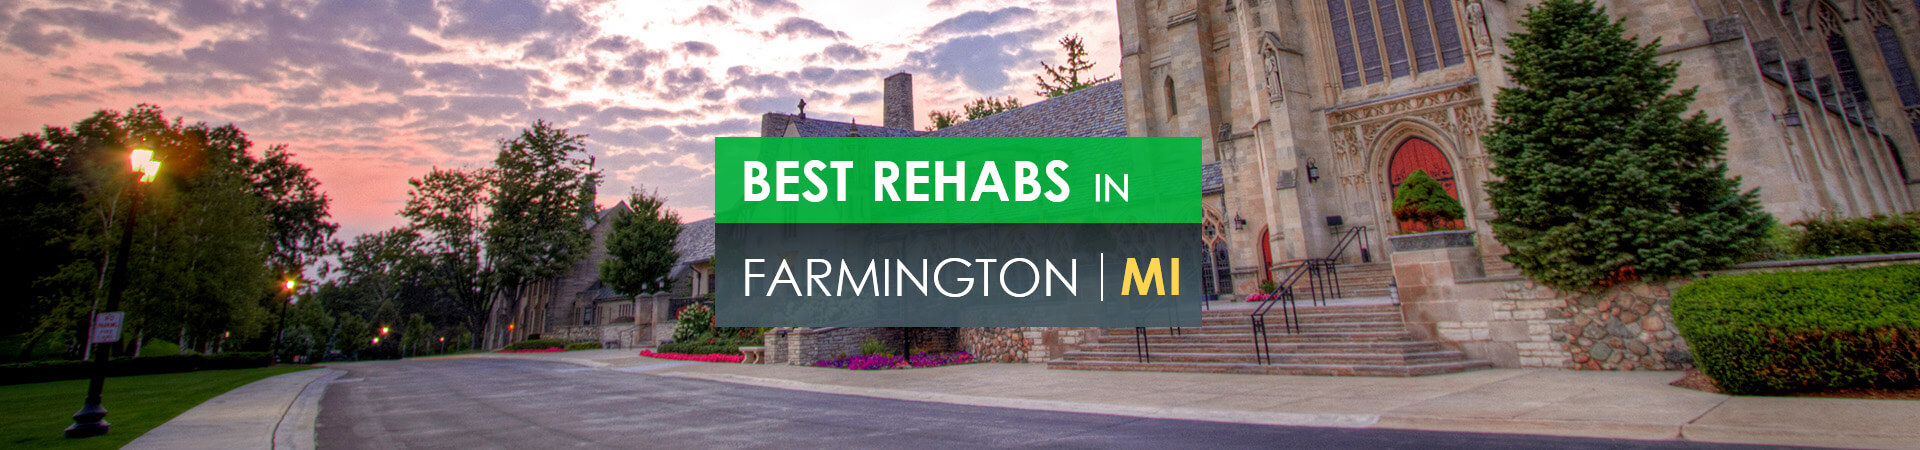 Best rehabs in Farmington, MI